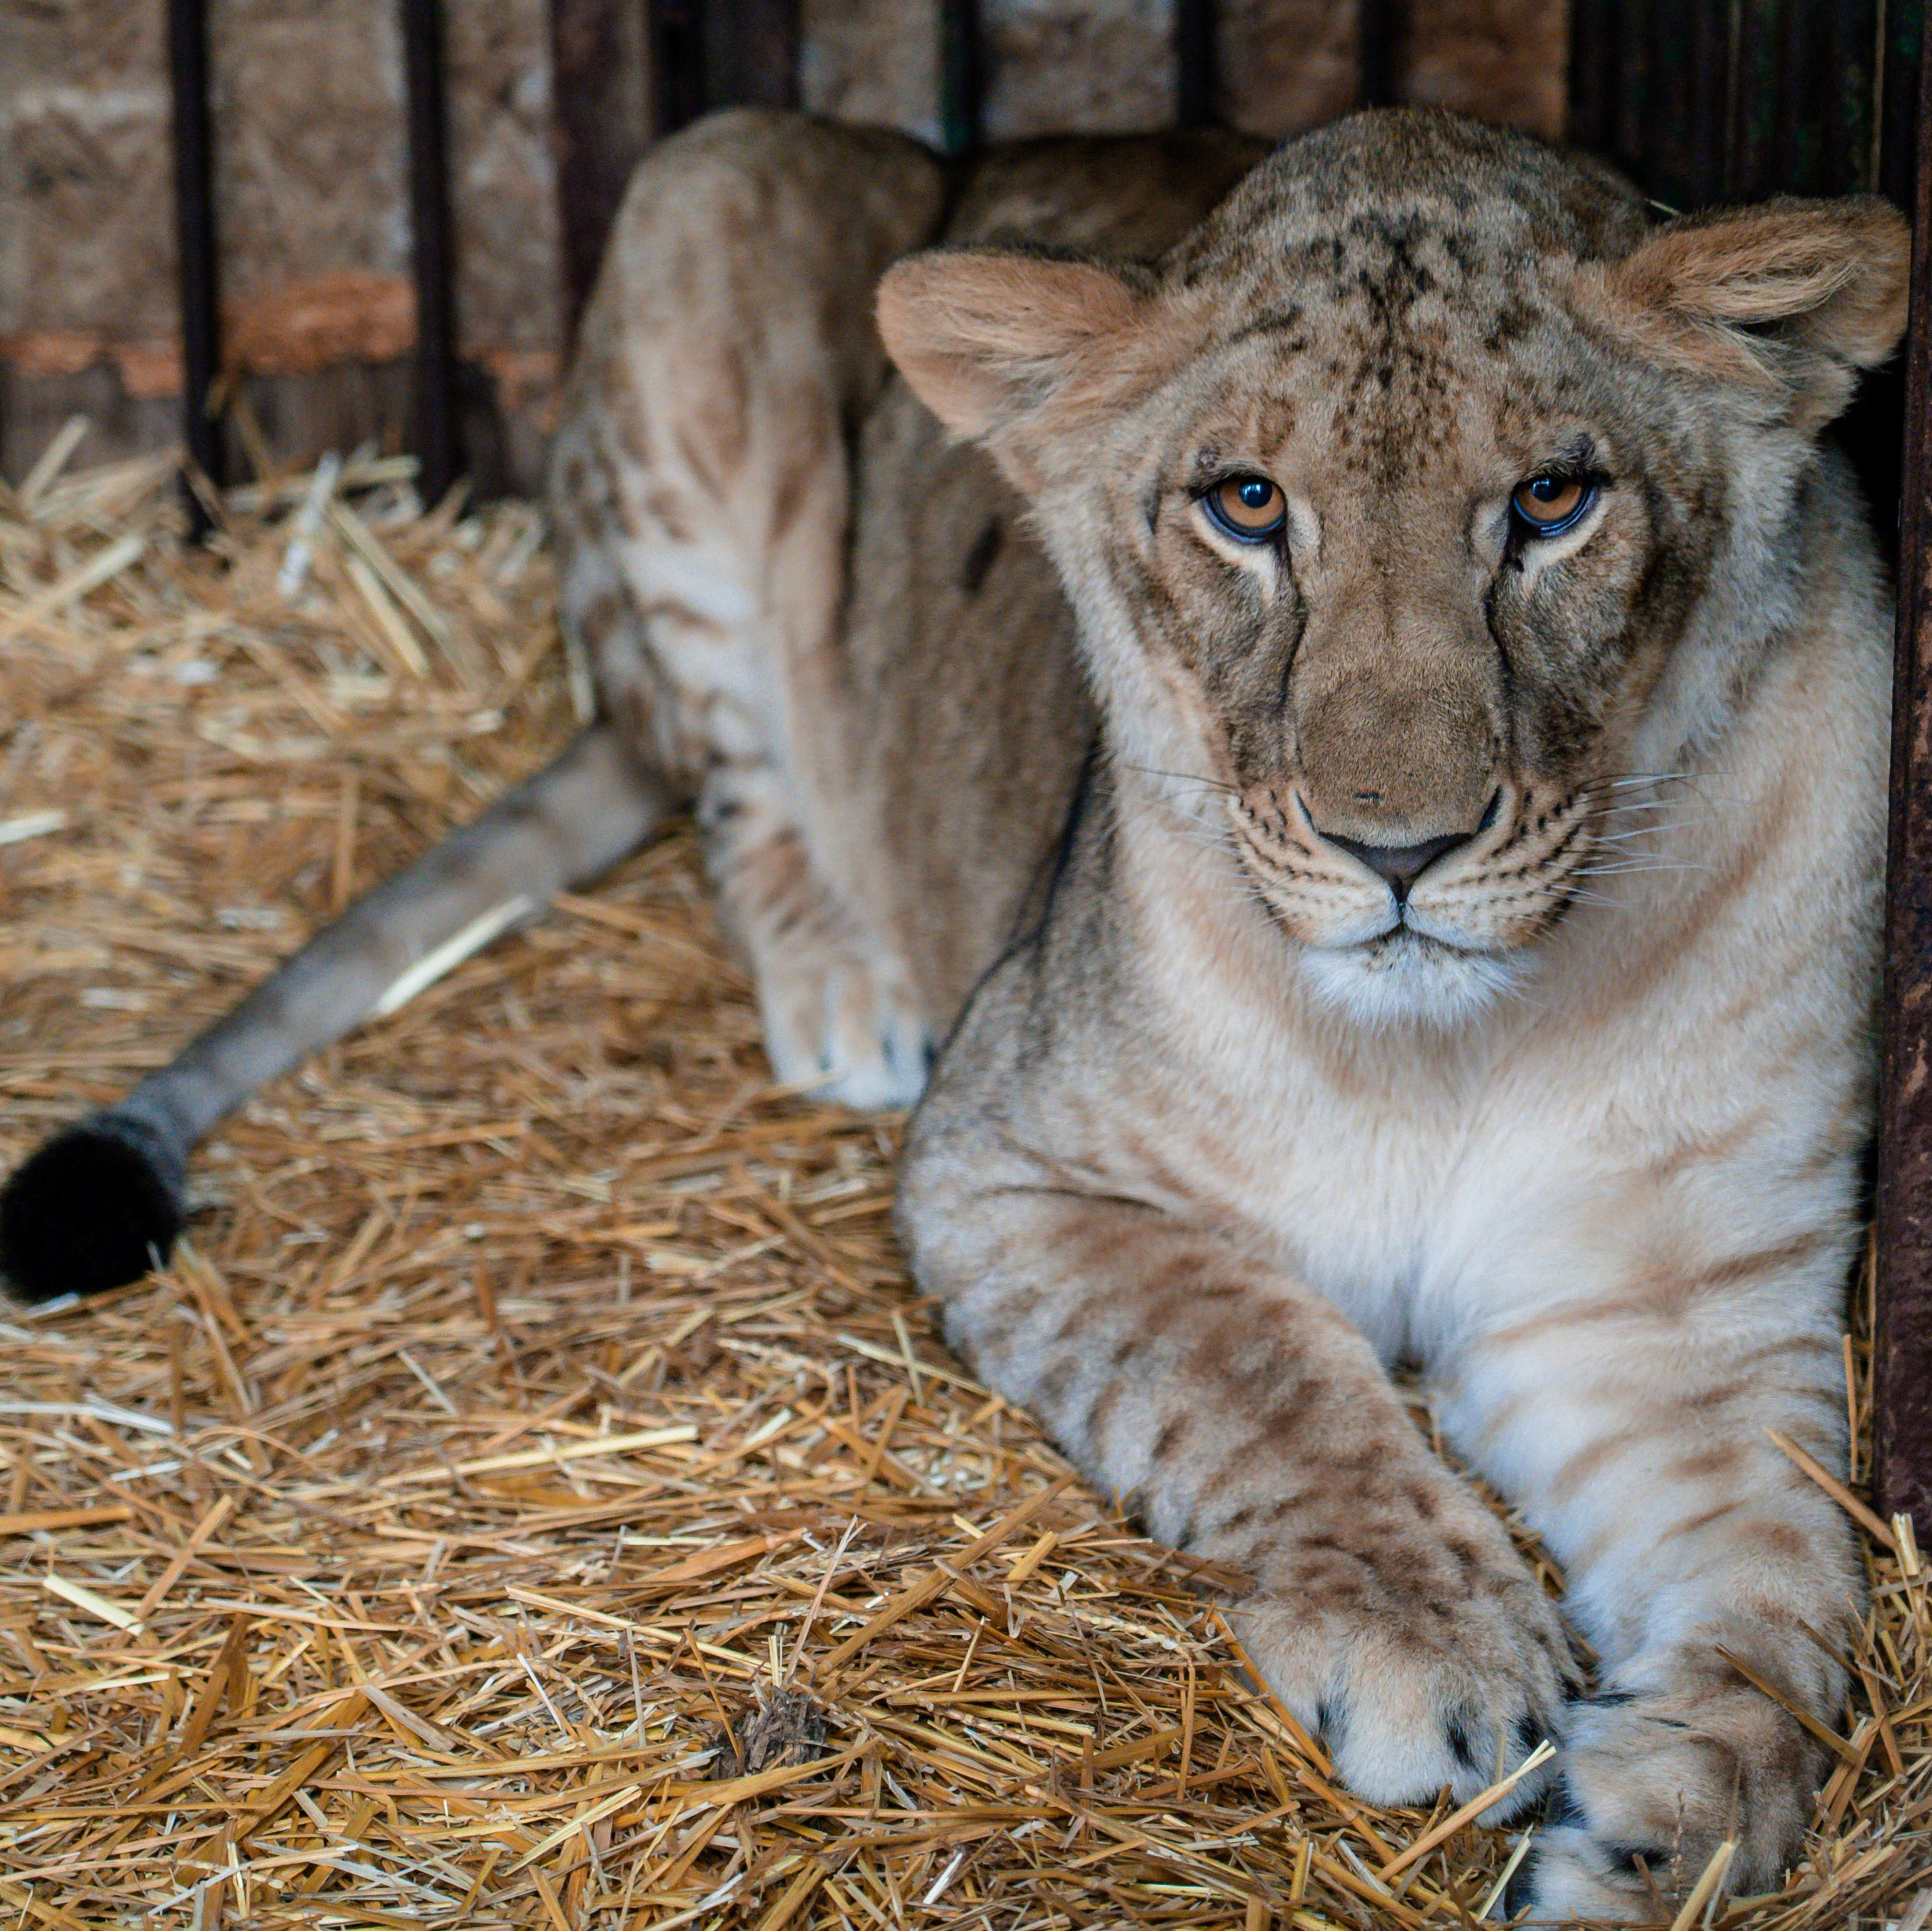 Lioness Vasylyna at Wild animal rescue near Kiev